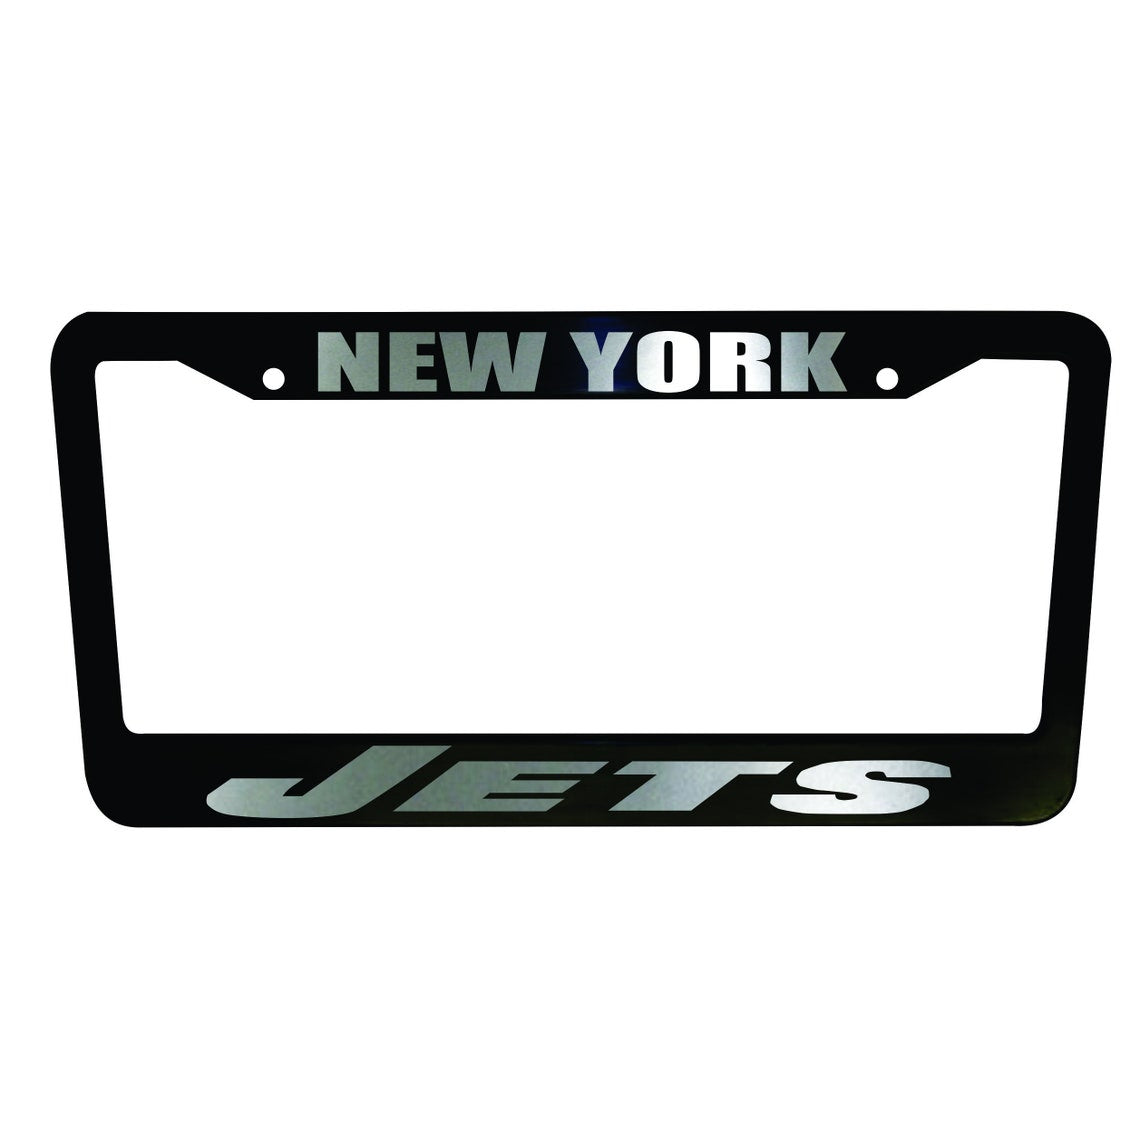 SET of 2 - New York Jets Black Plastic or Aluminum License Plate Frames Truck Car Van Décor Car Accessories New Car Gifts Sports Car Parts